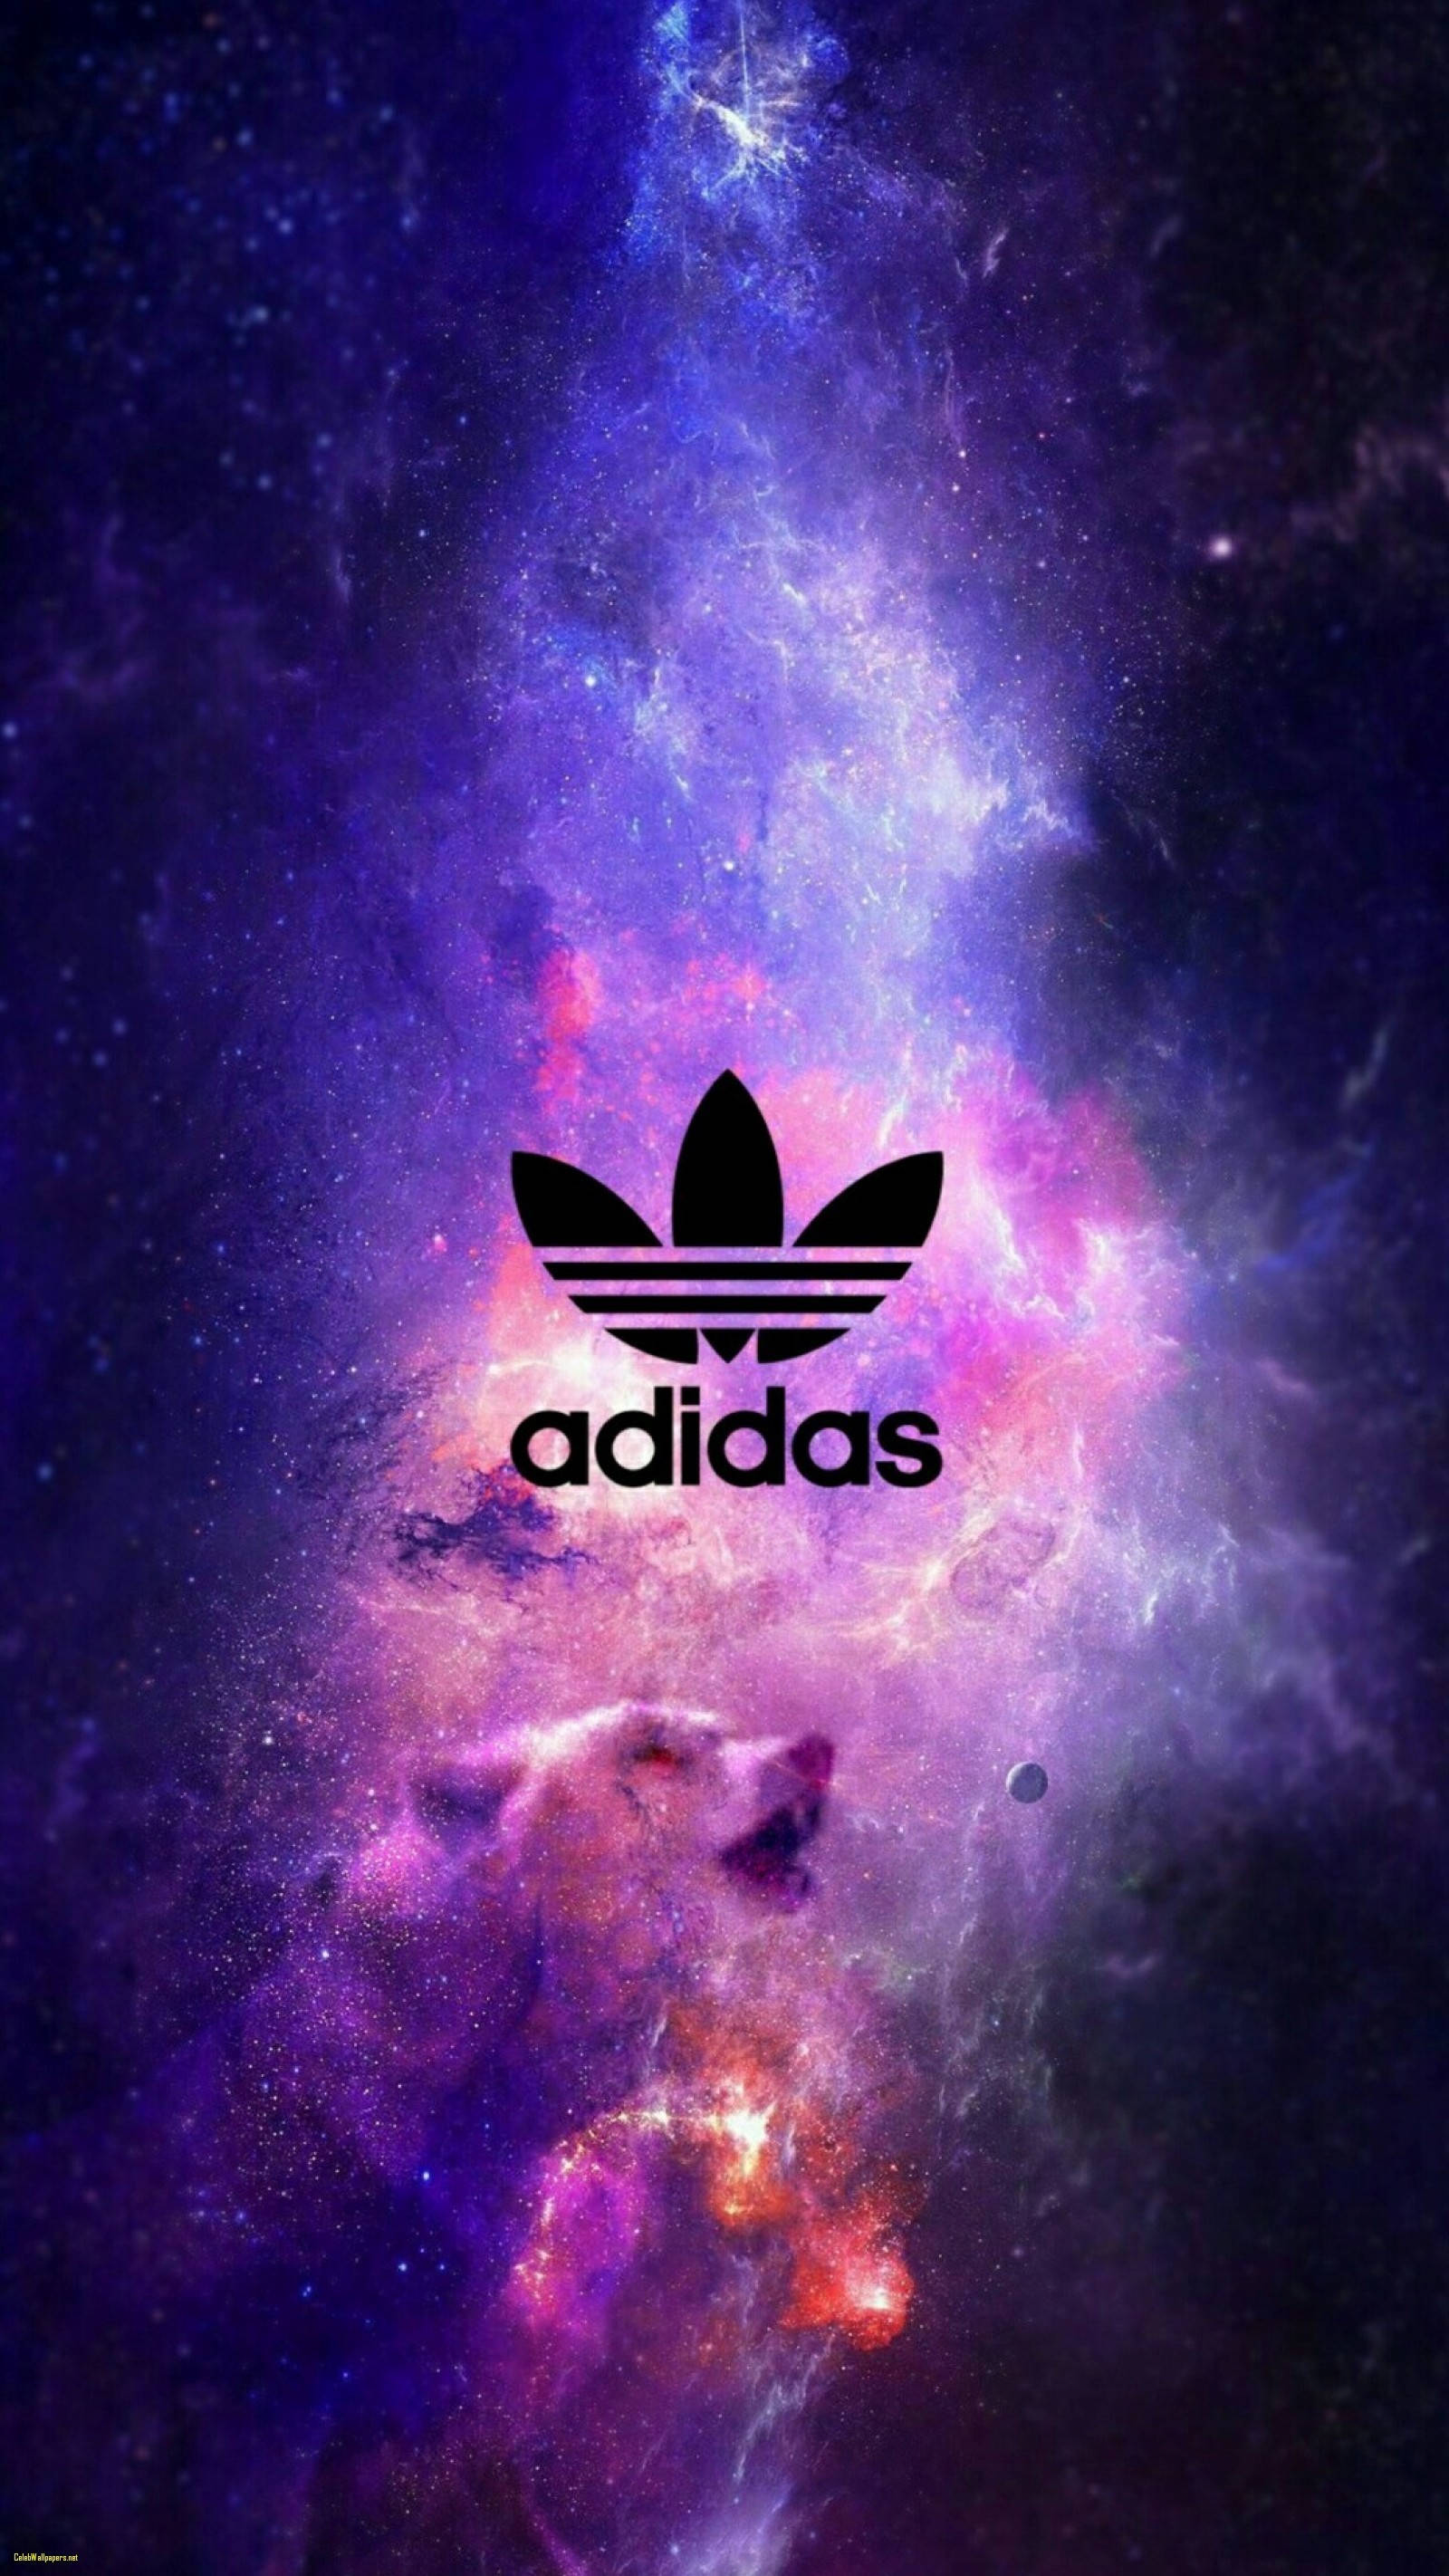 Adidas Brand On Purple Galaxy Wolf Background